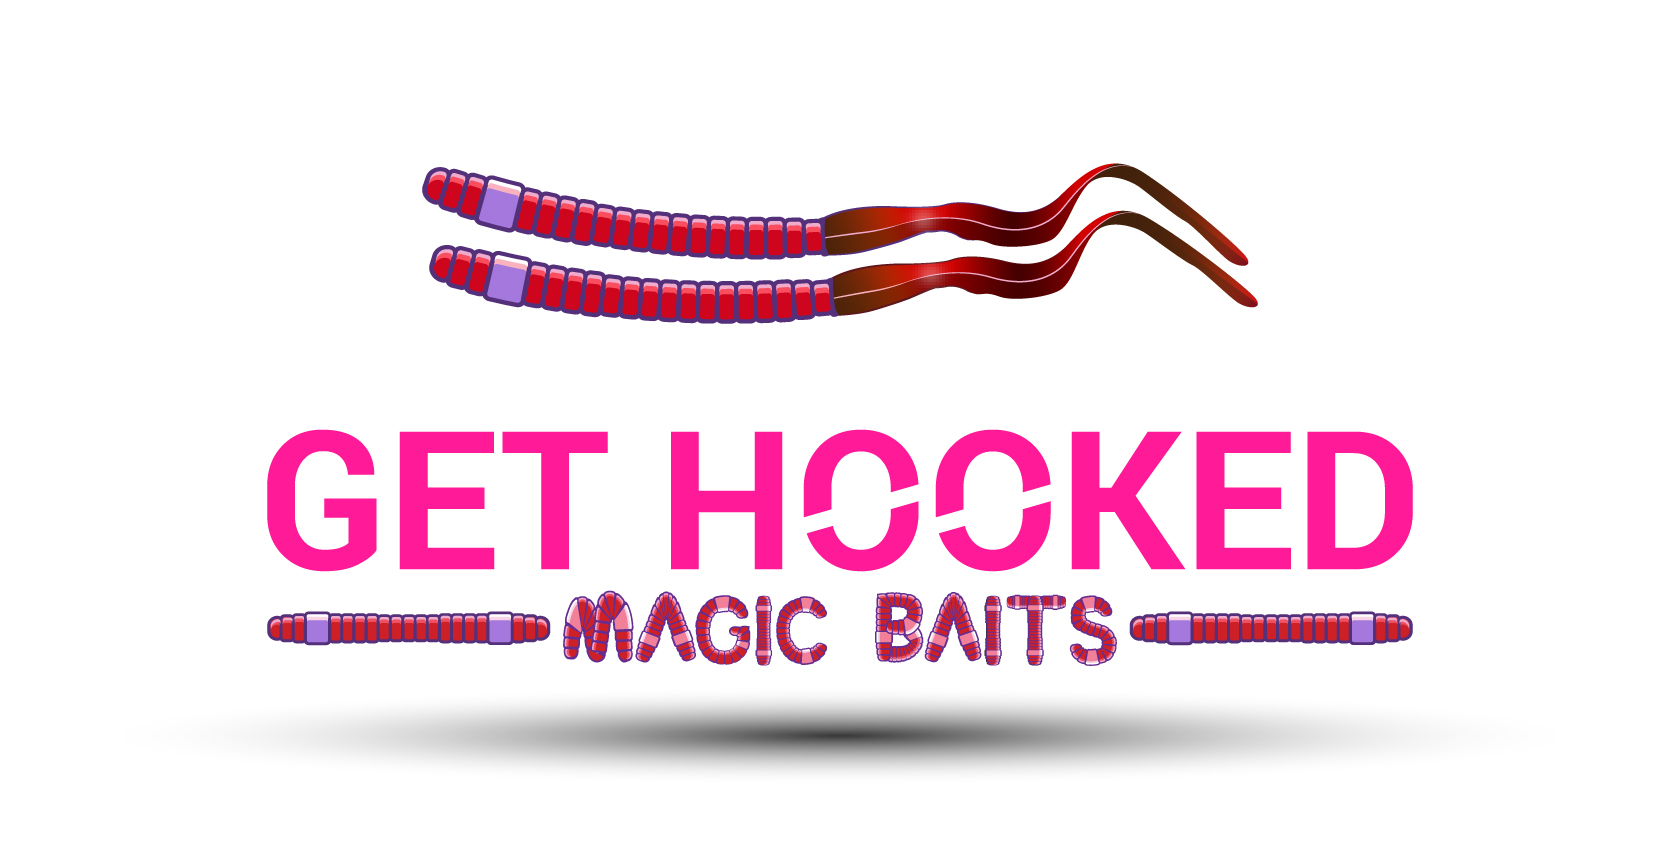 Mono Fishing line - Get Hooked Magic Baits